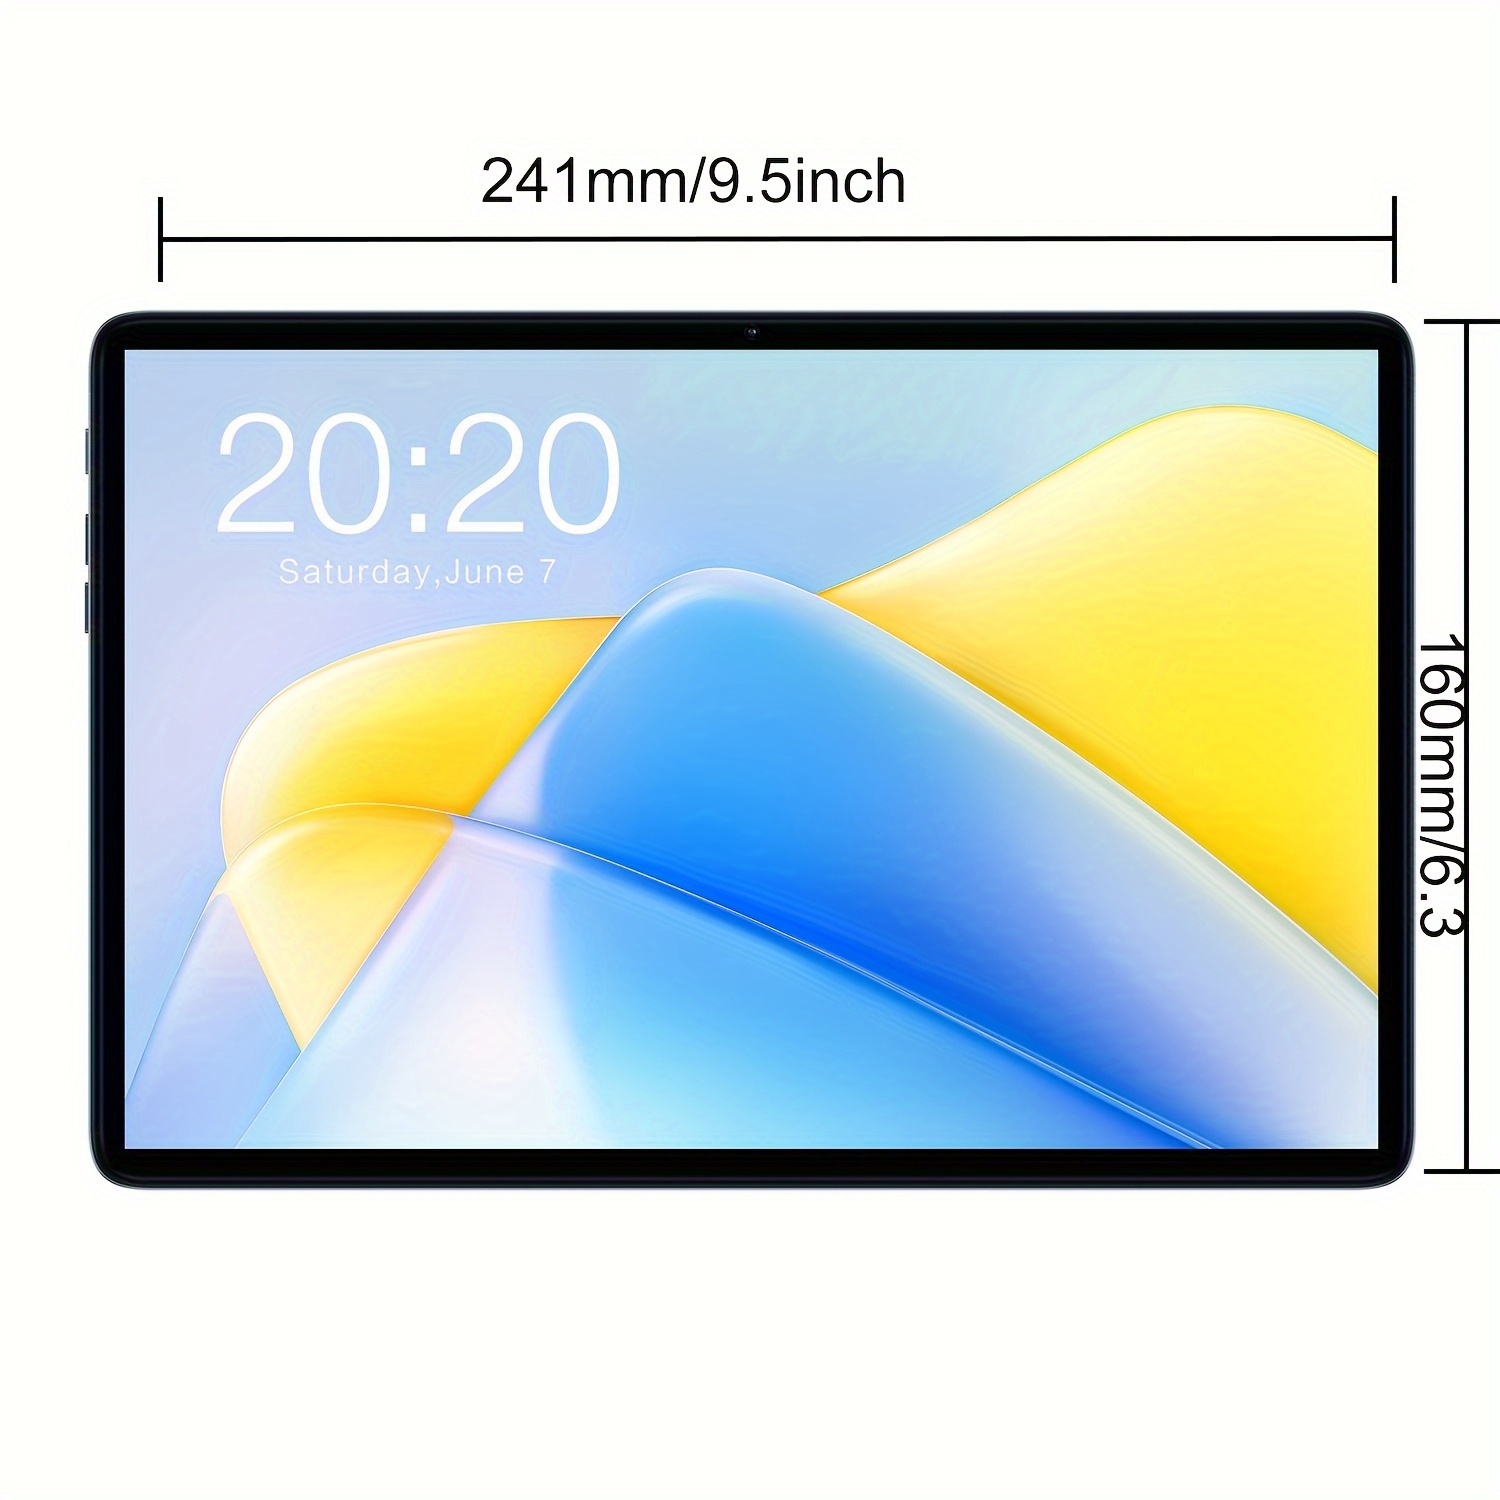 Teclast P30t 2023 Tablet Allwinner A523 8 core - Temu